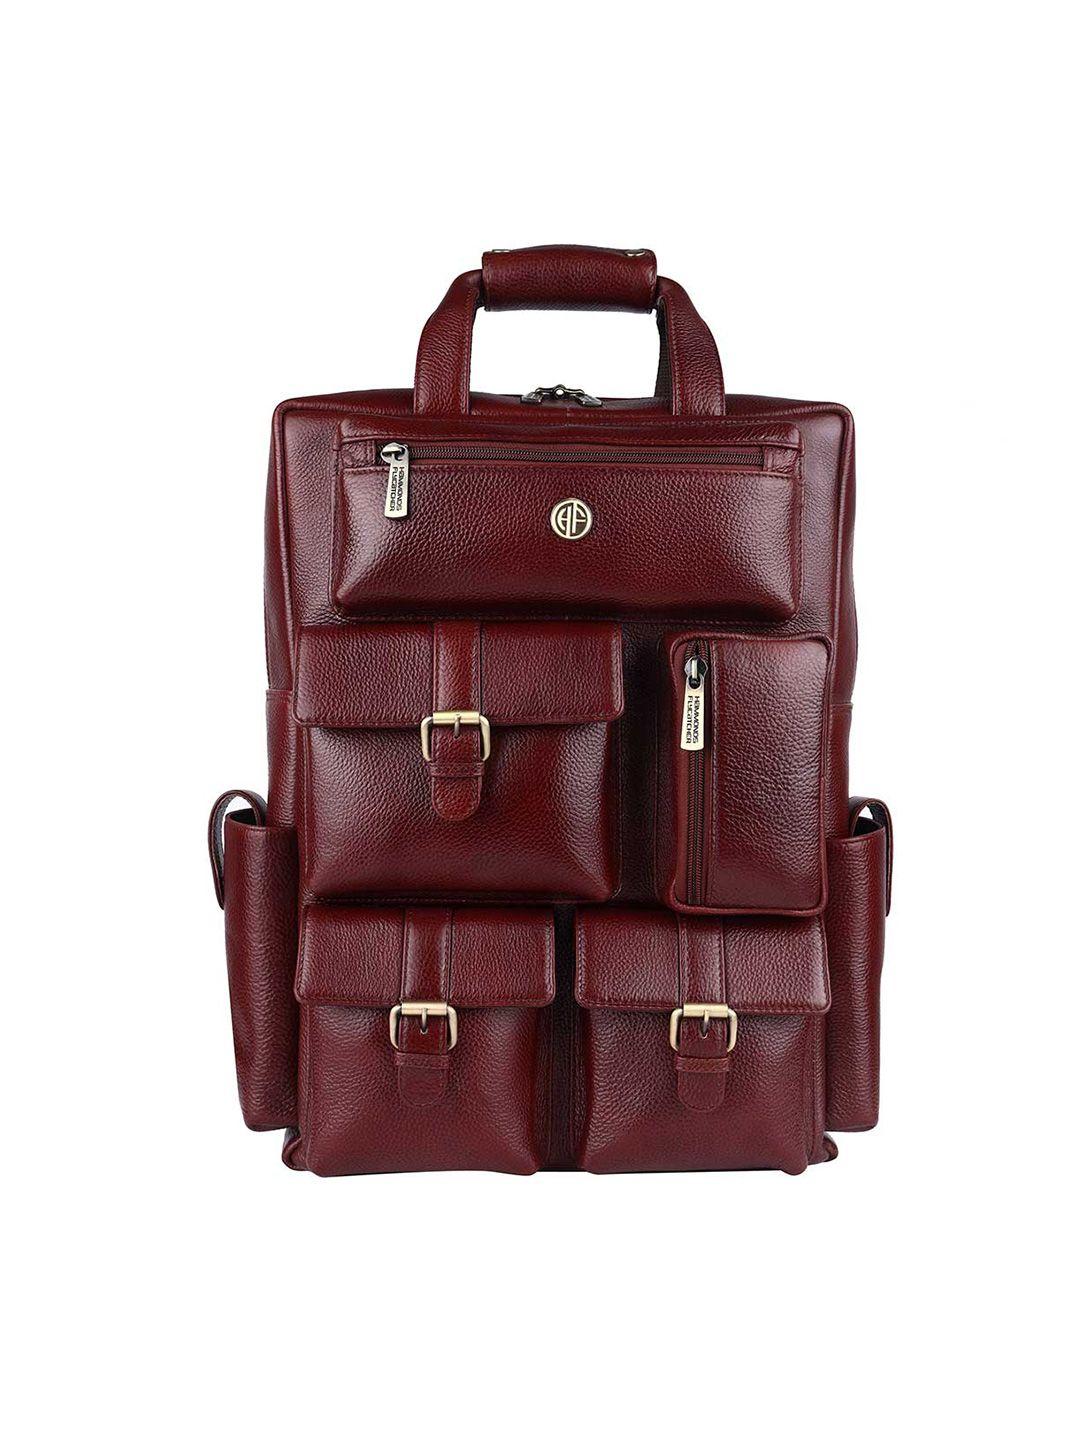 hammonds flycatcher unisex brown leather 15 inch laptop backpack